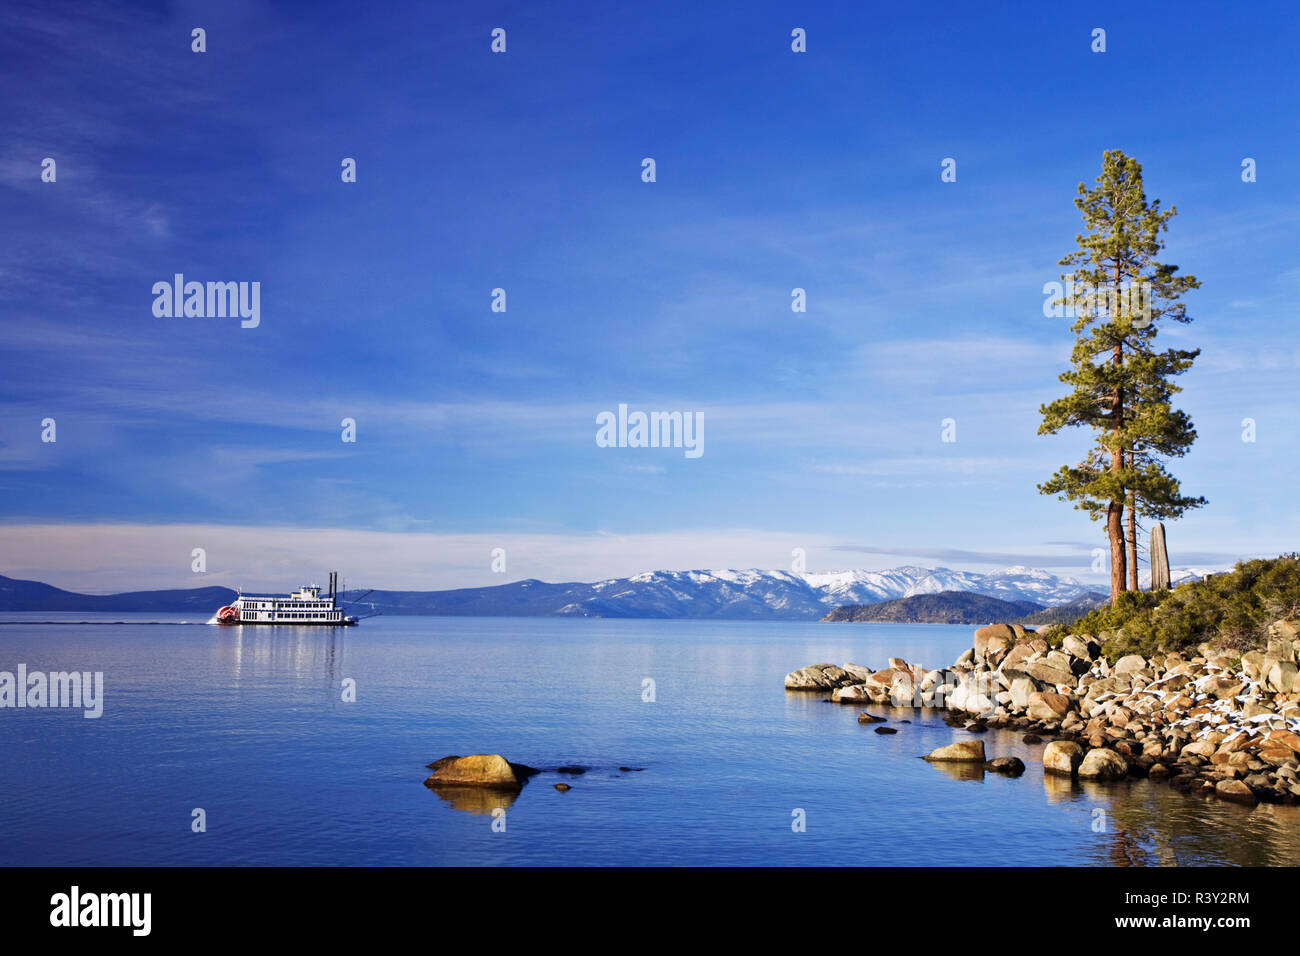 Stati Uniti d'America, Nevada, Lake Tahoe. Racchetta tele in barca sul lago. Foto Stock